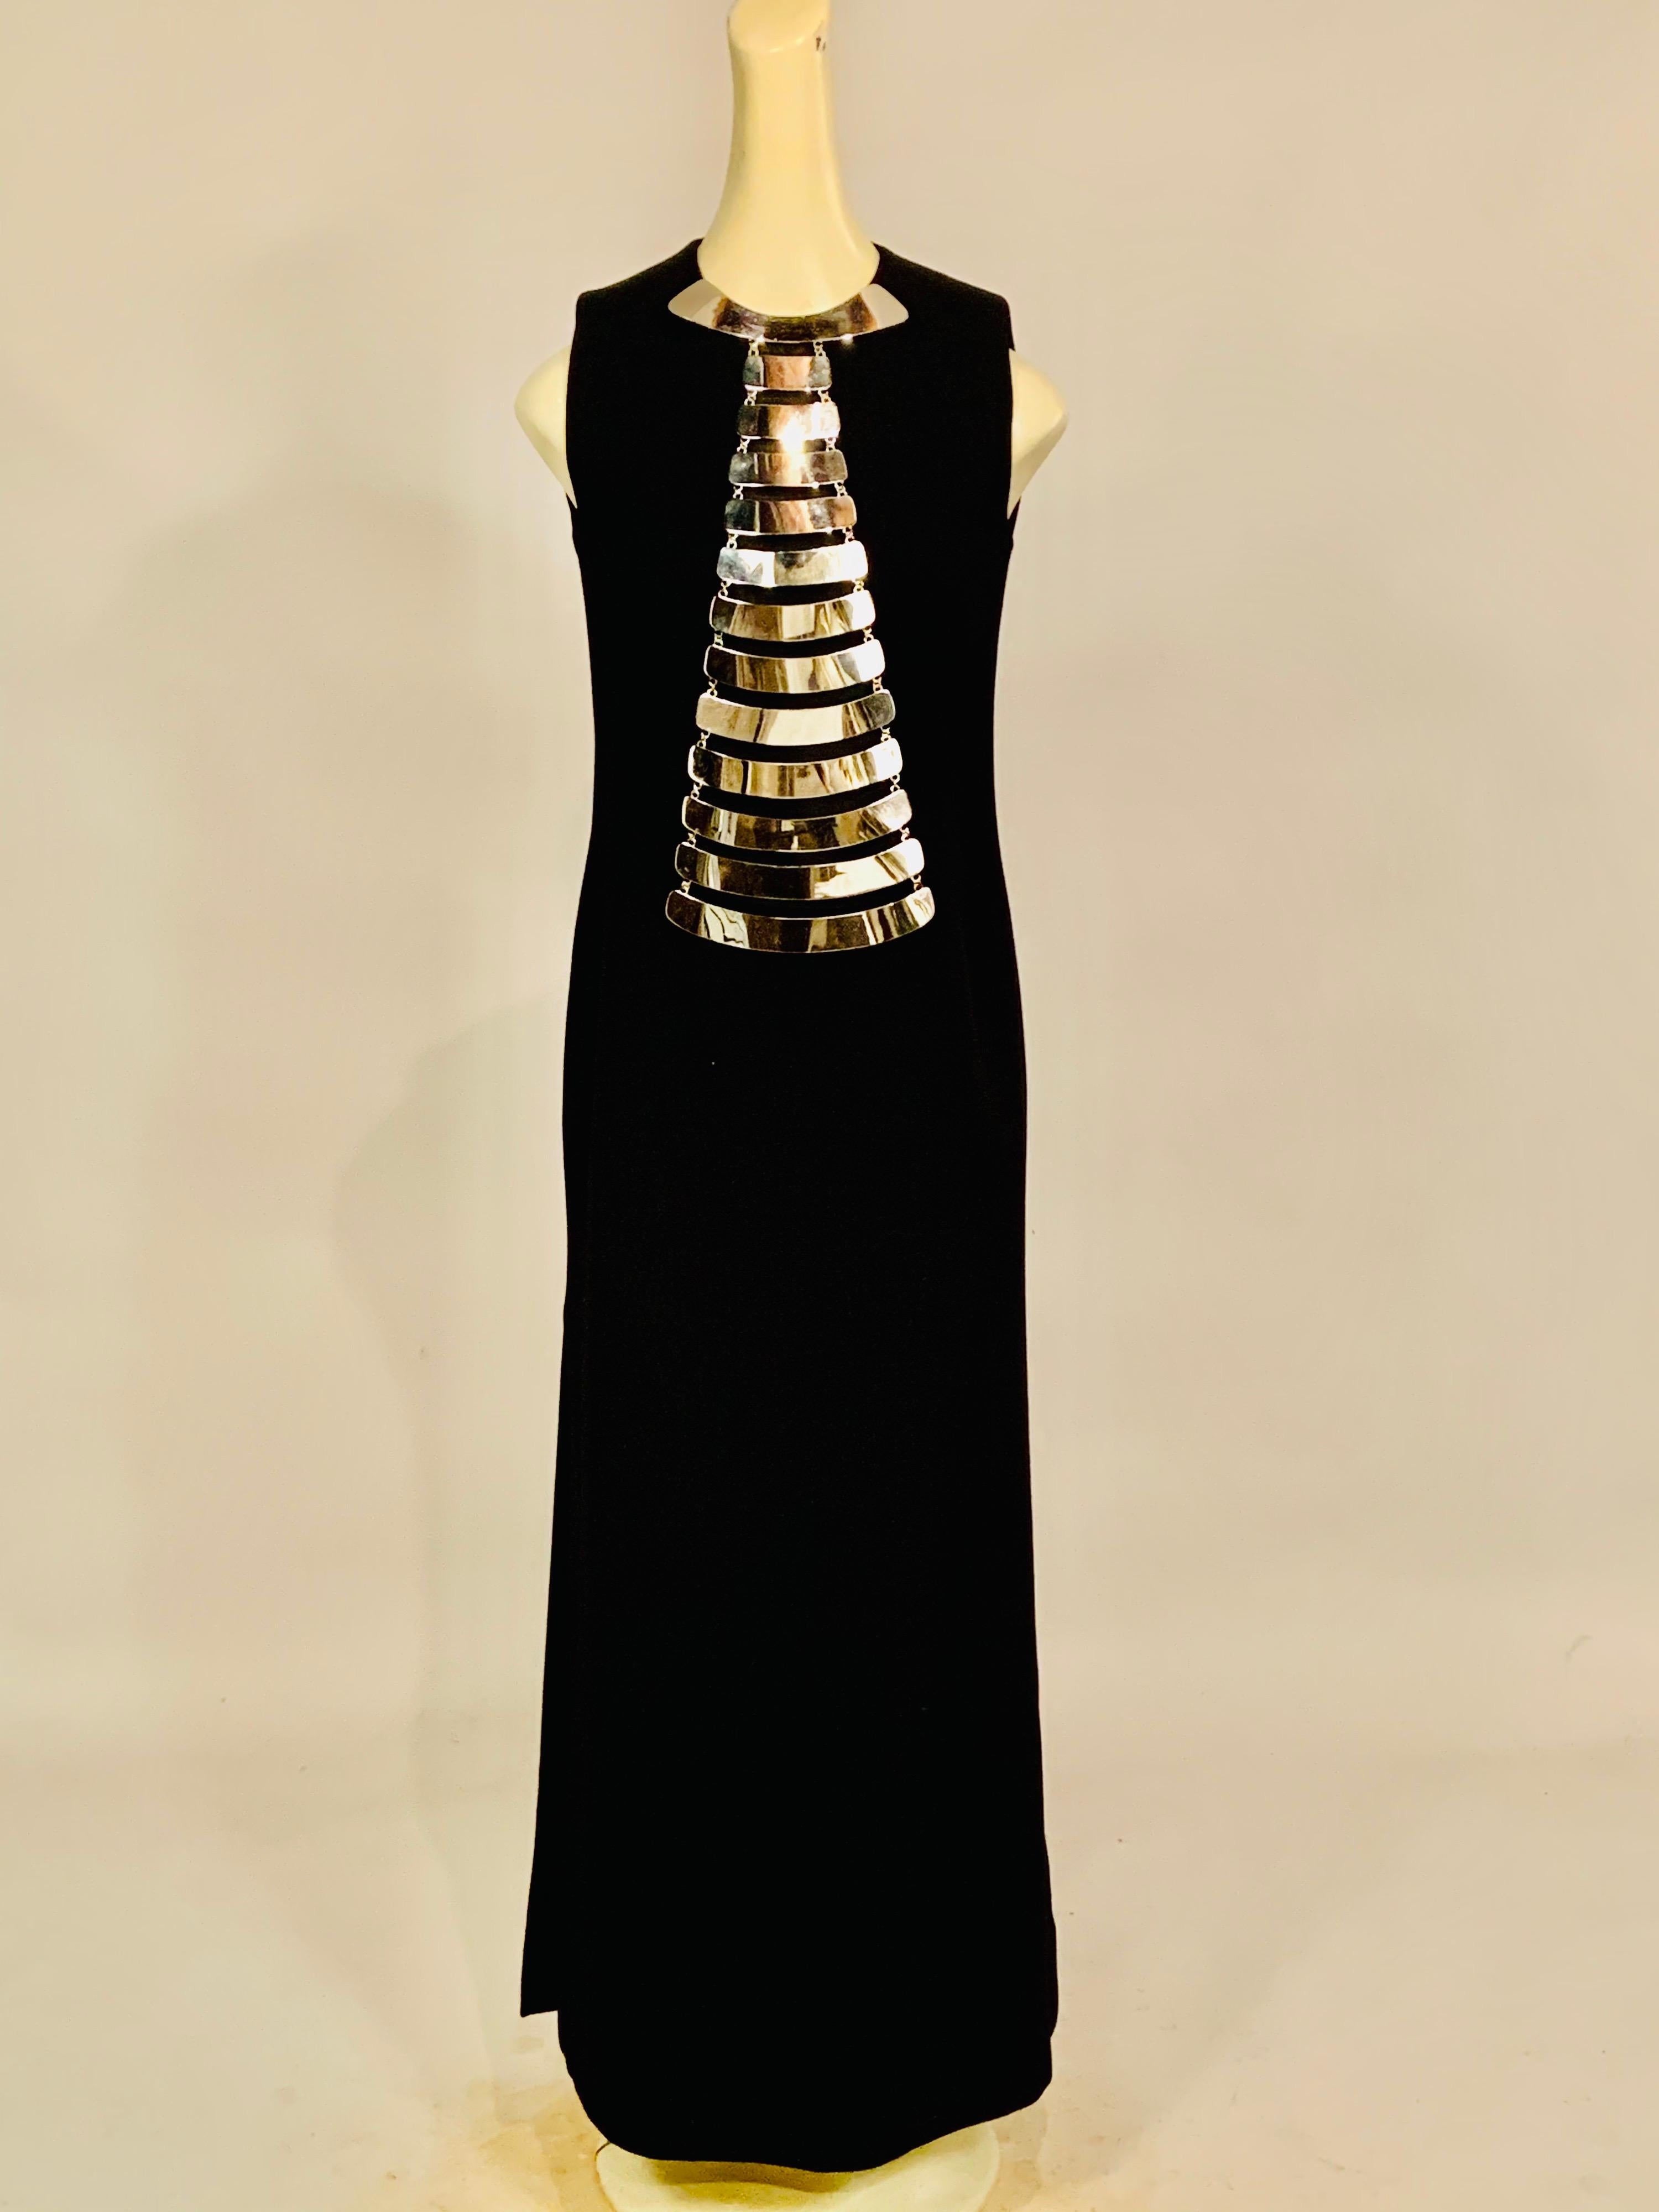 Vintage Pierre Cardin Space Age Black Dress with a Chrome Bib Necklace  c. 1968 1